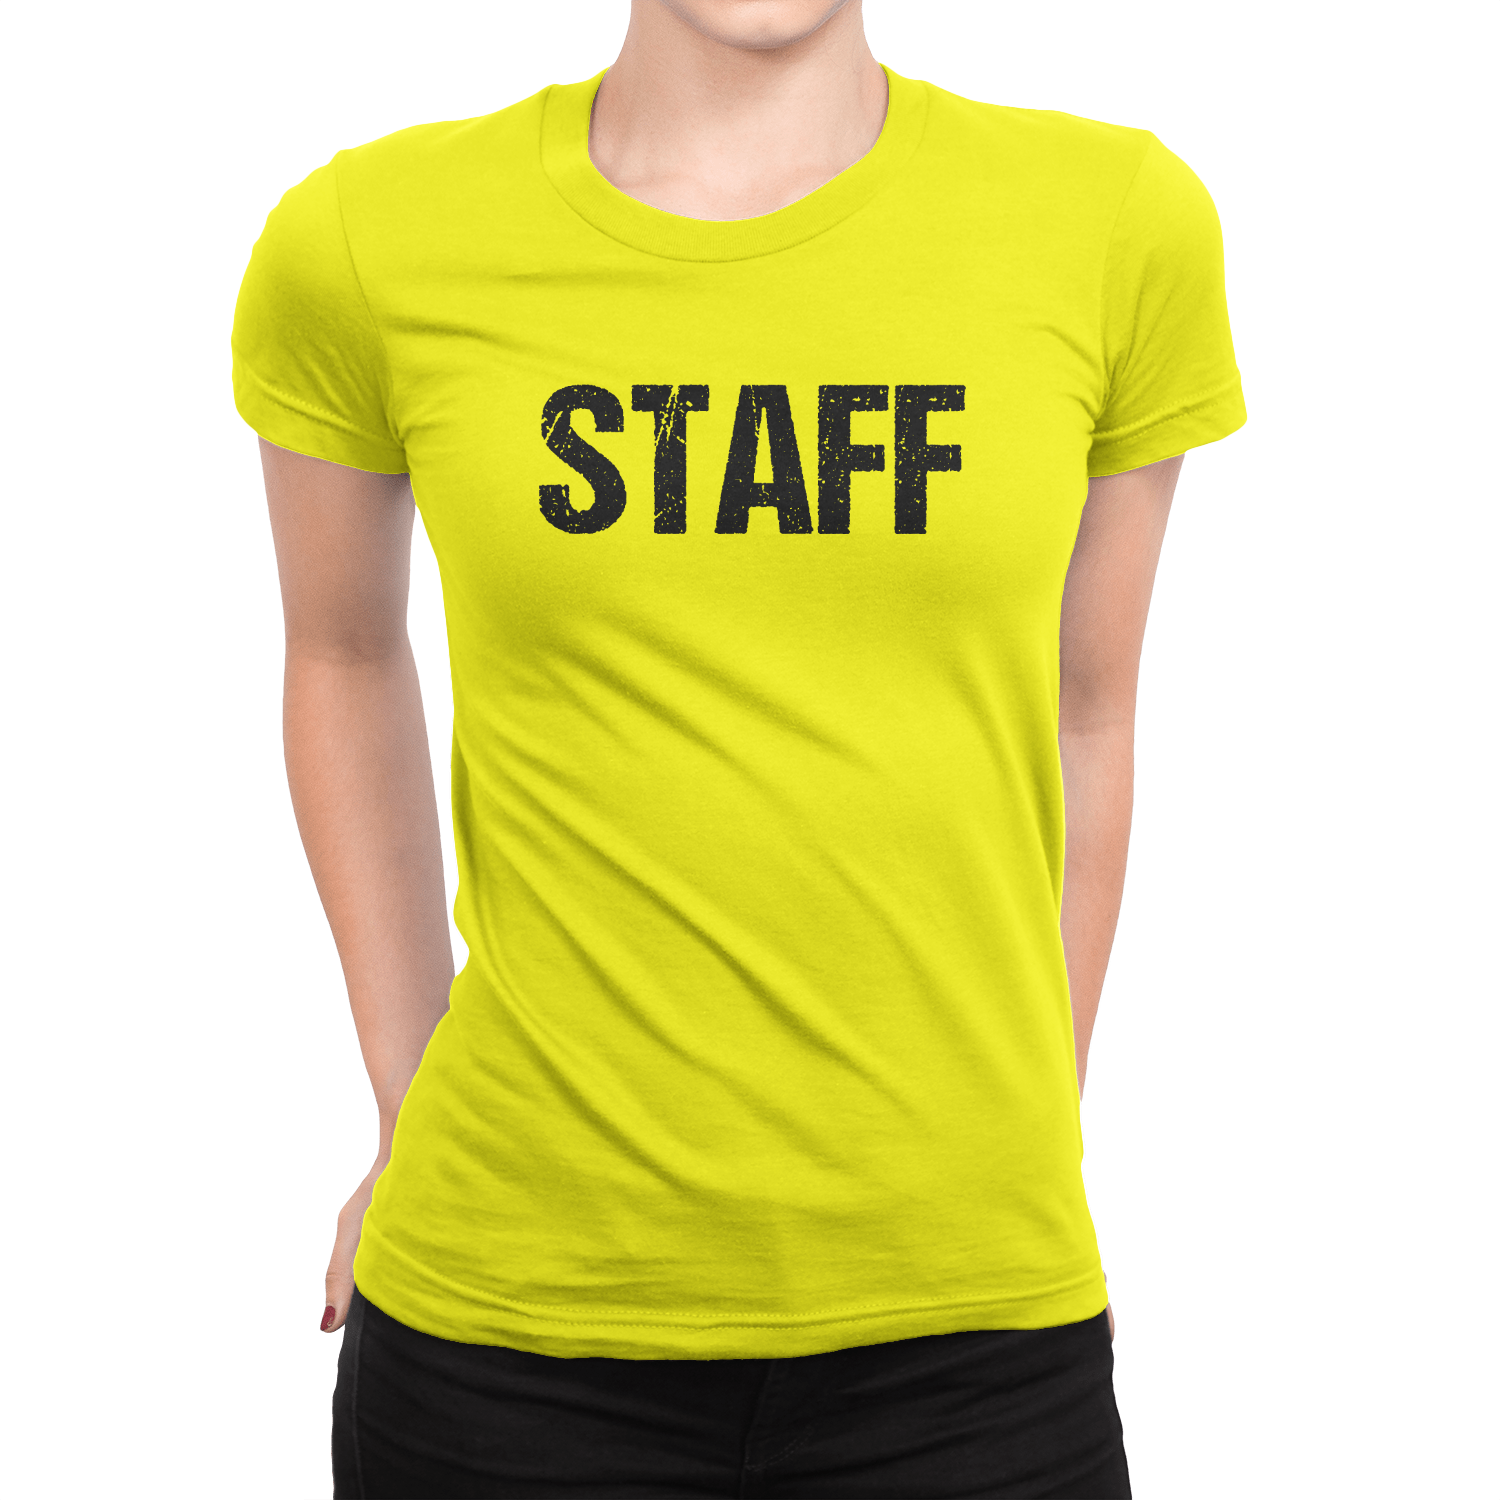 Staff ladies tees safety neon green shirts